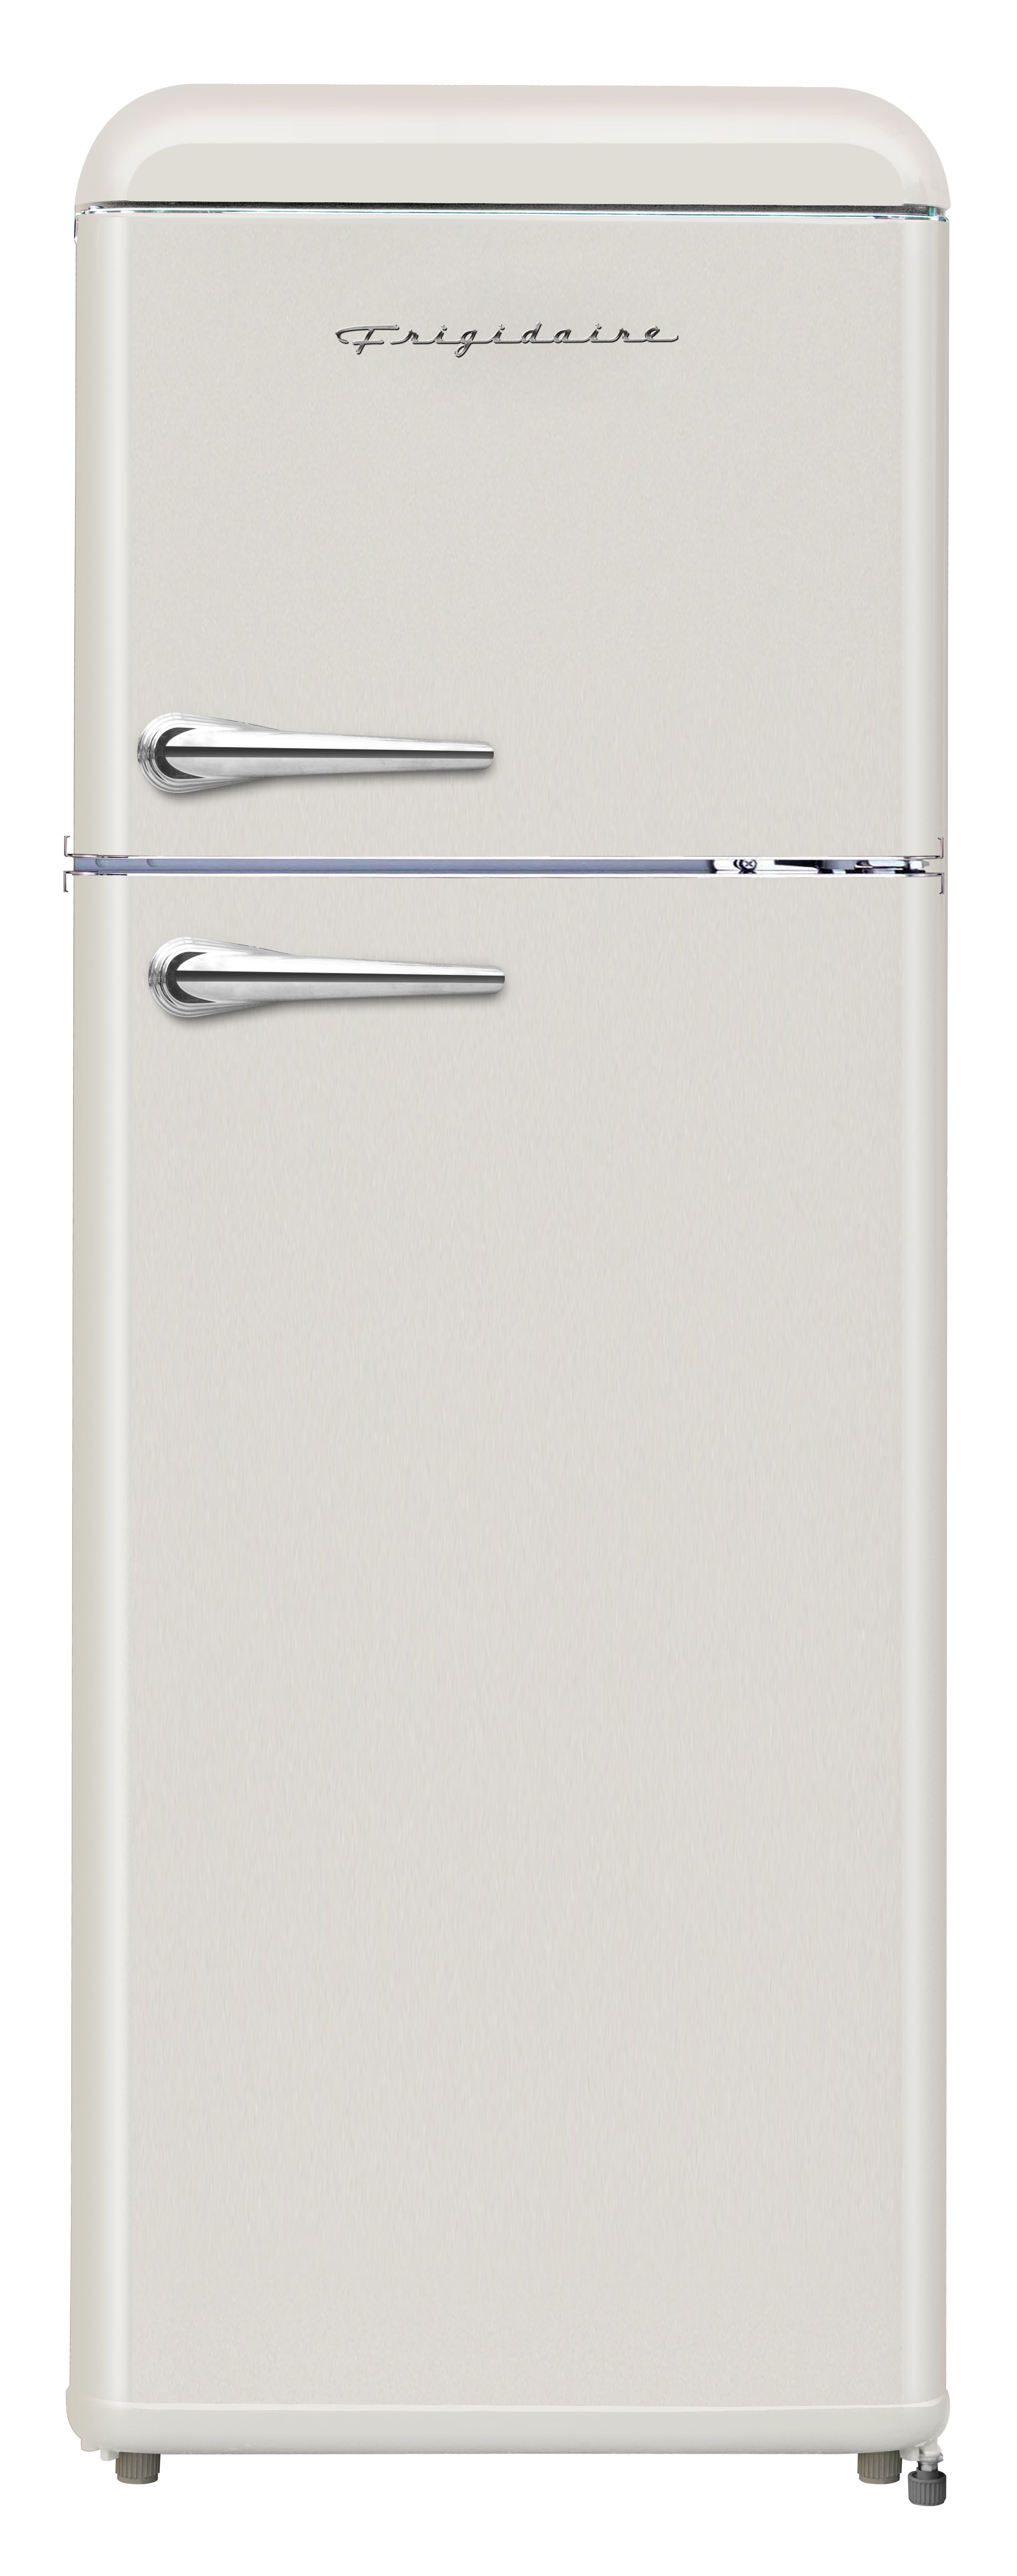 Frigidaire 7.5 Cu. ft. Top Freezer Refrigerator in Cream, Rounded Corners -  Retro, EFR756